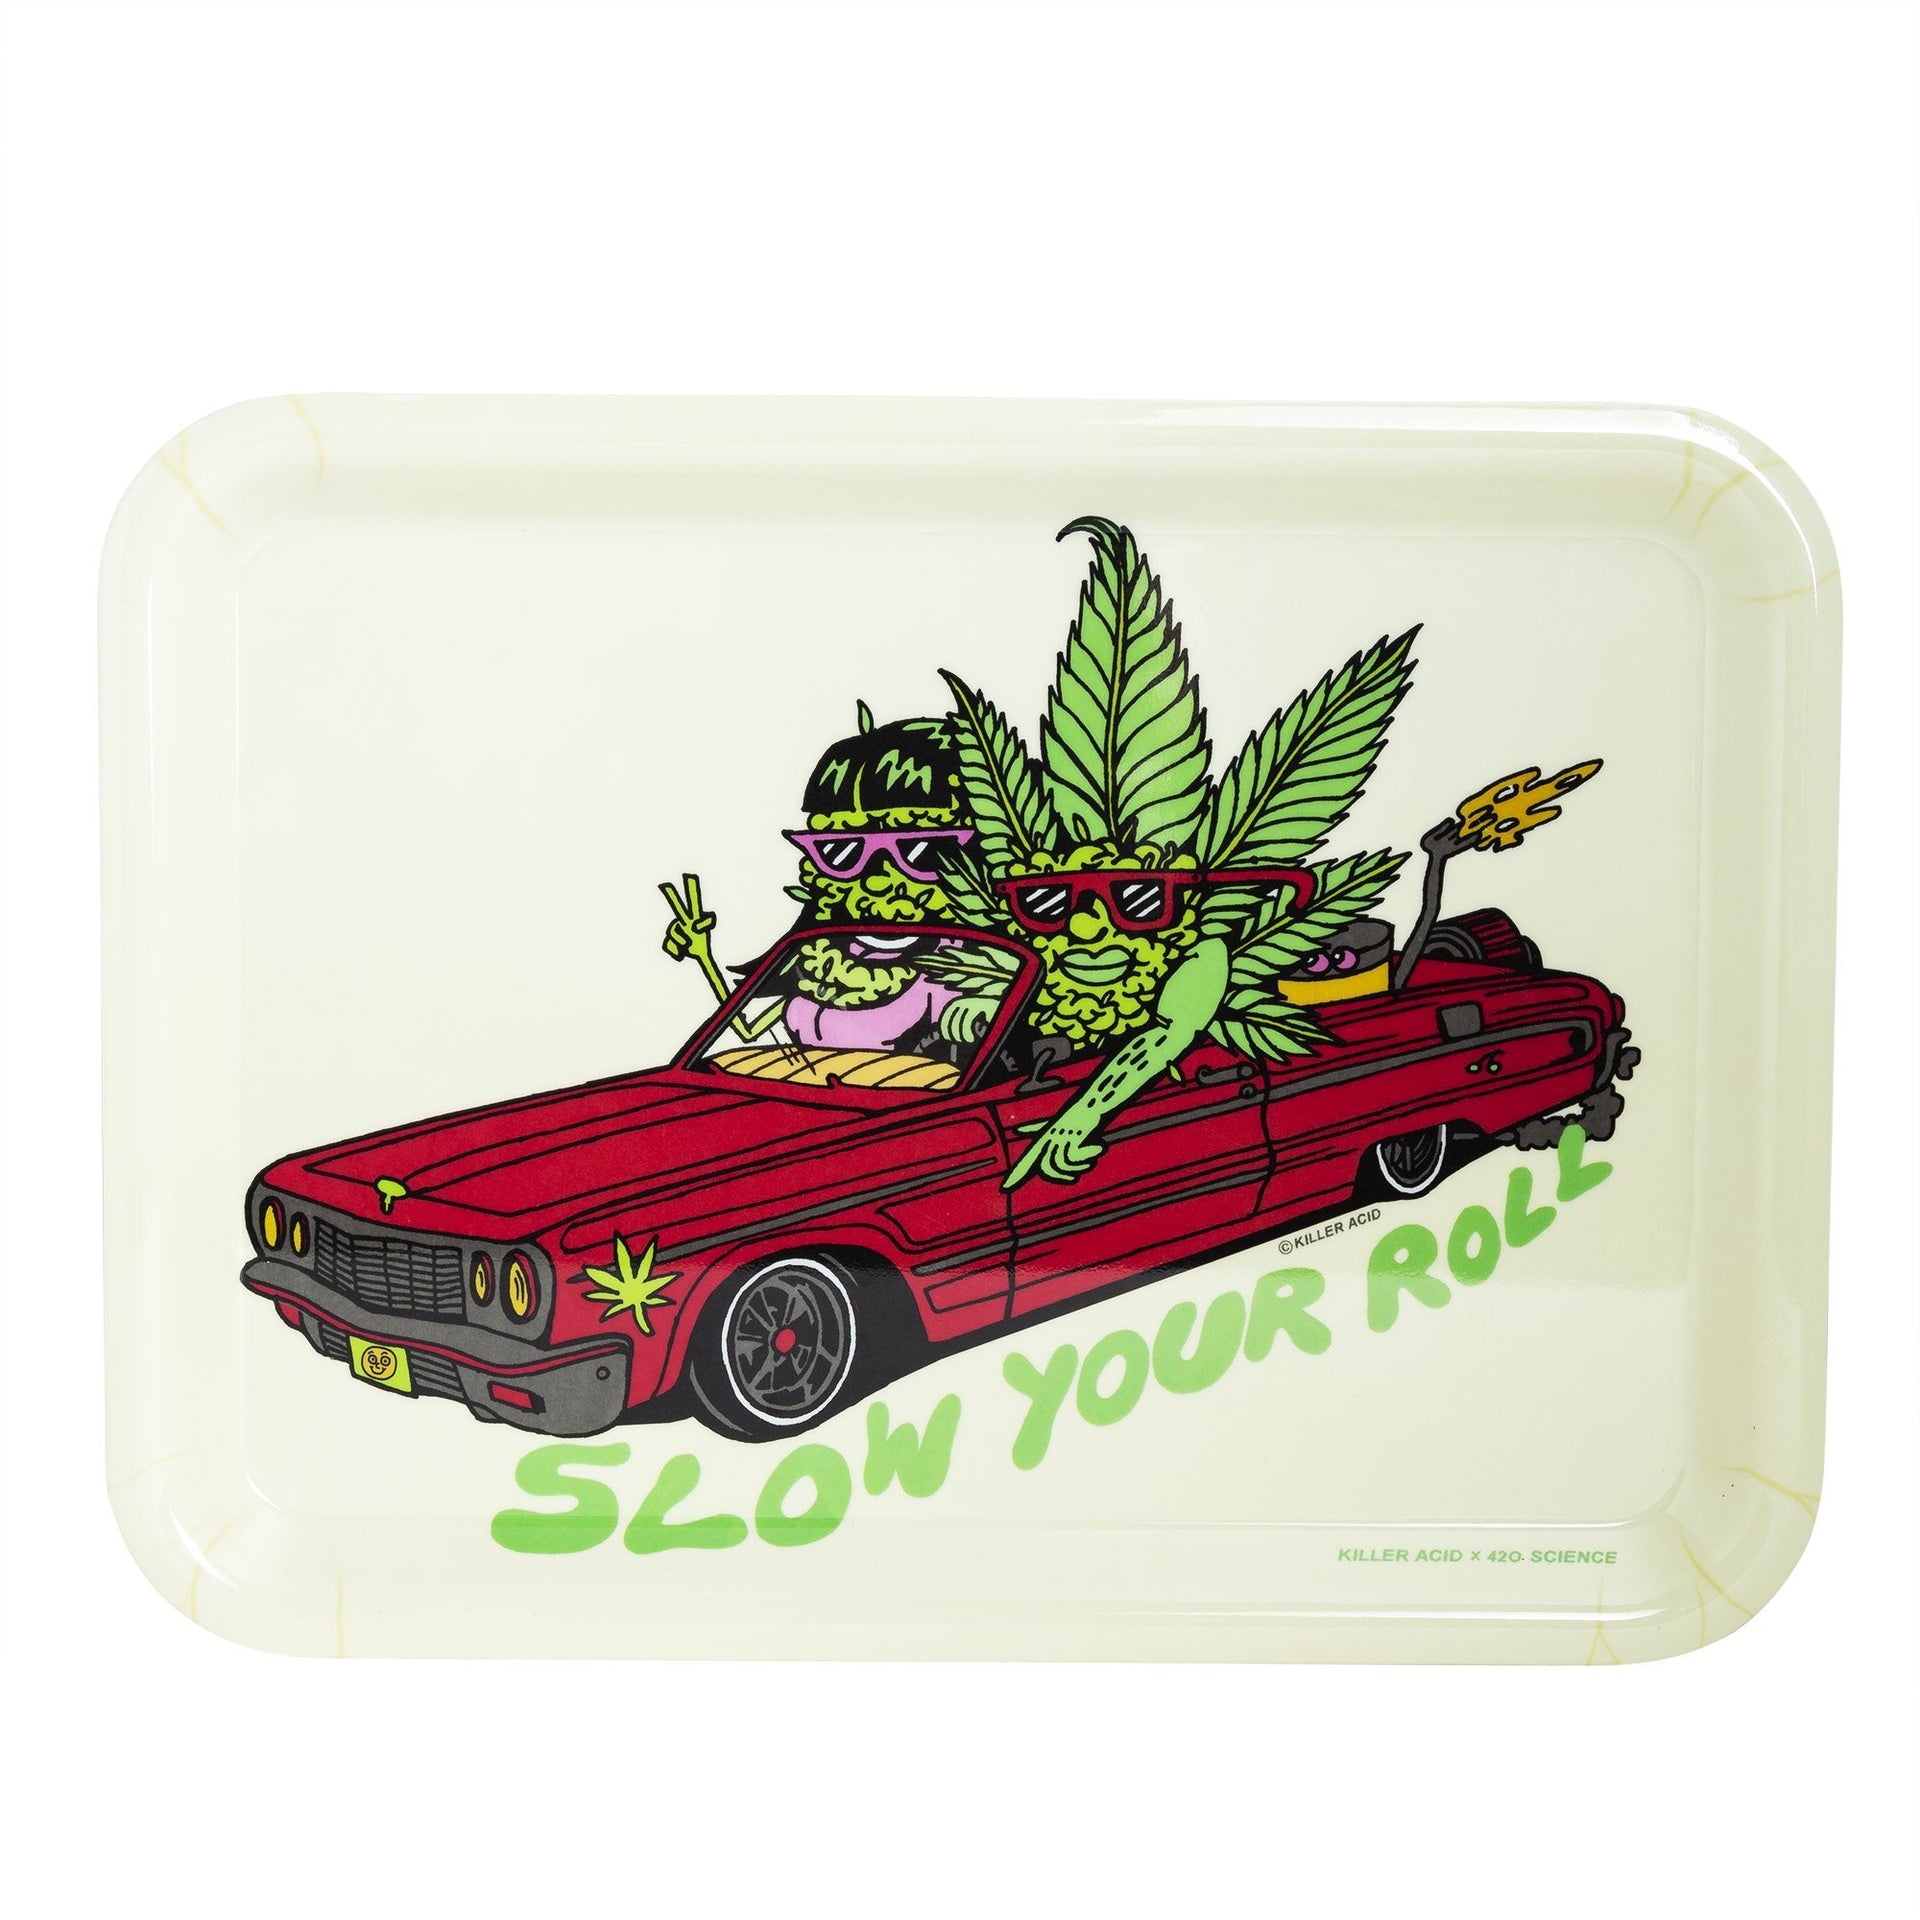 420 Science x Killer Acid Rolling Tray - Smoke Em / $ 19.99 at 420